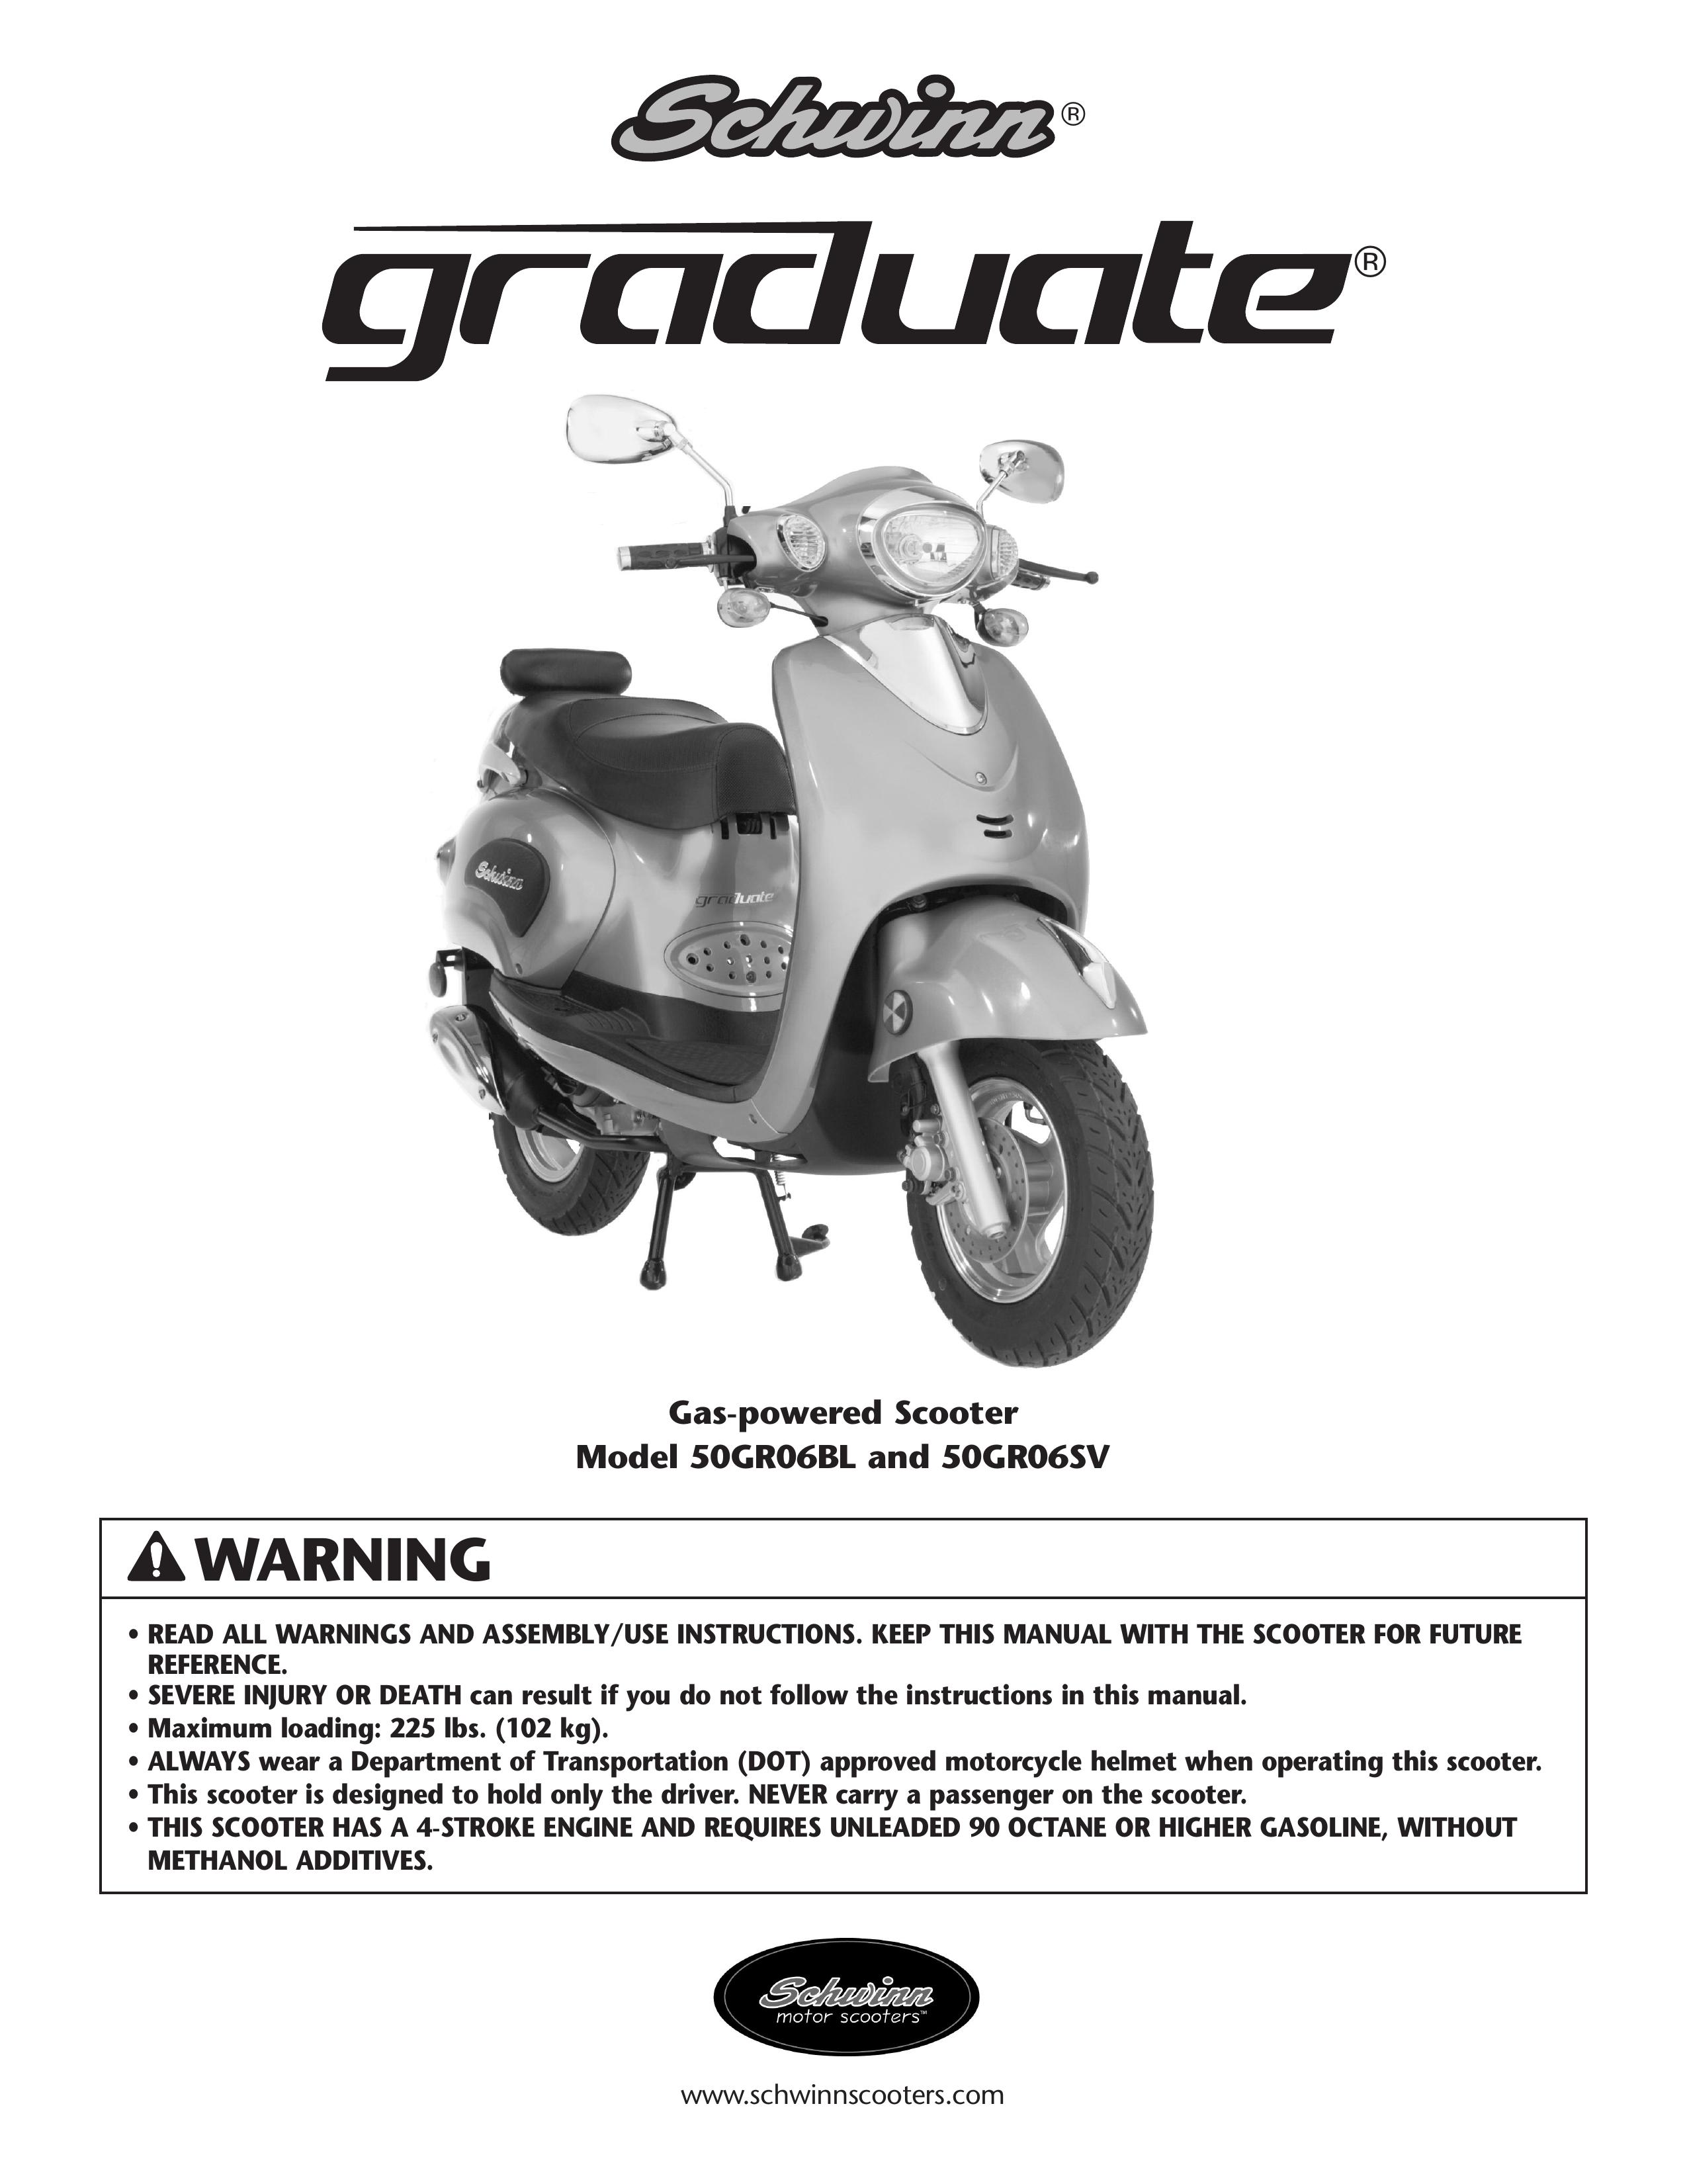 Schwinn Motor Scooters 50GR06SV Mobility Aid User Manual